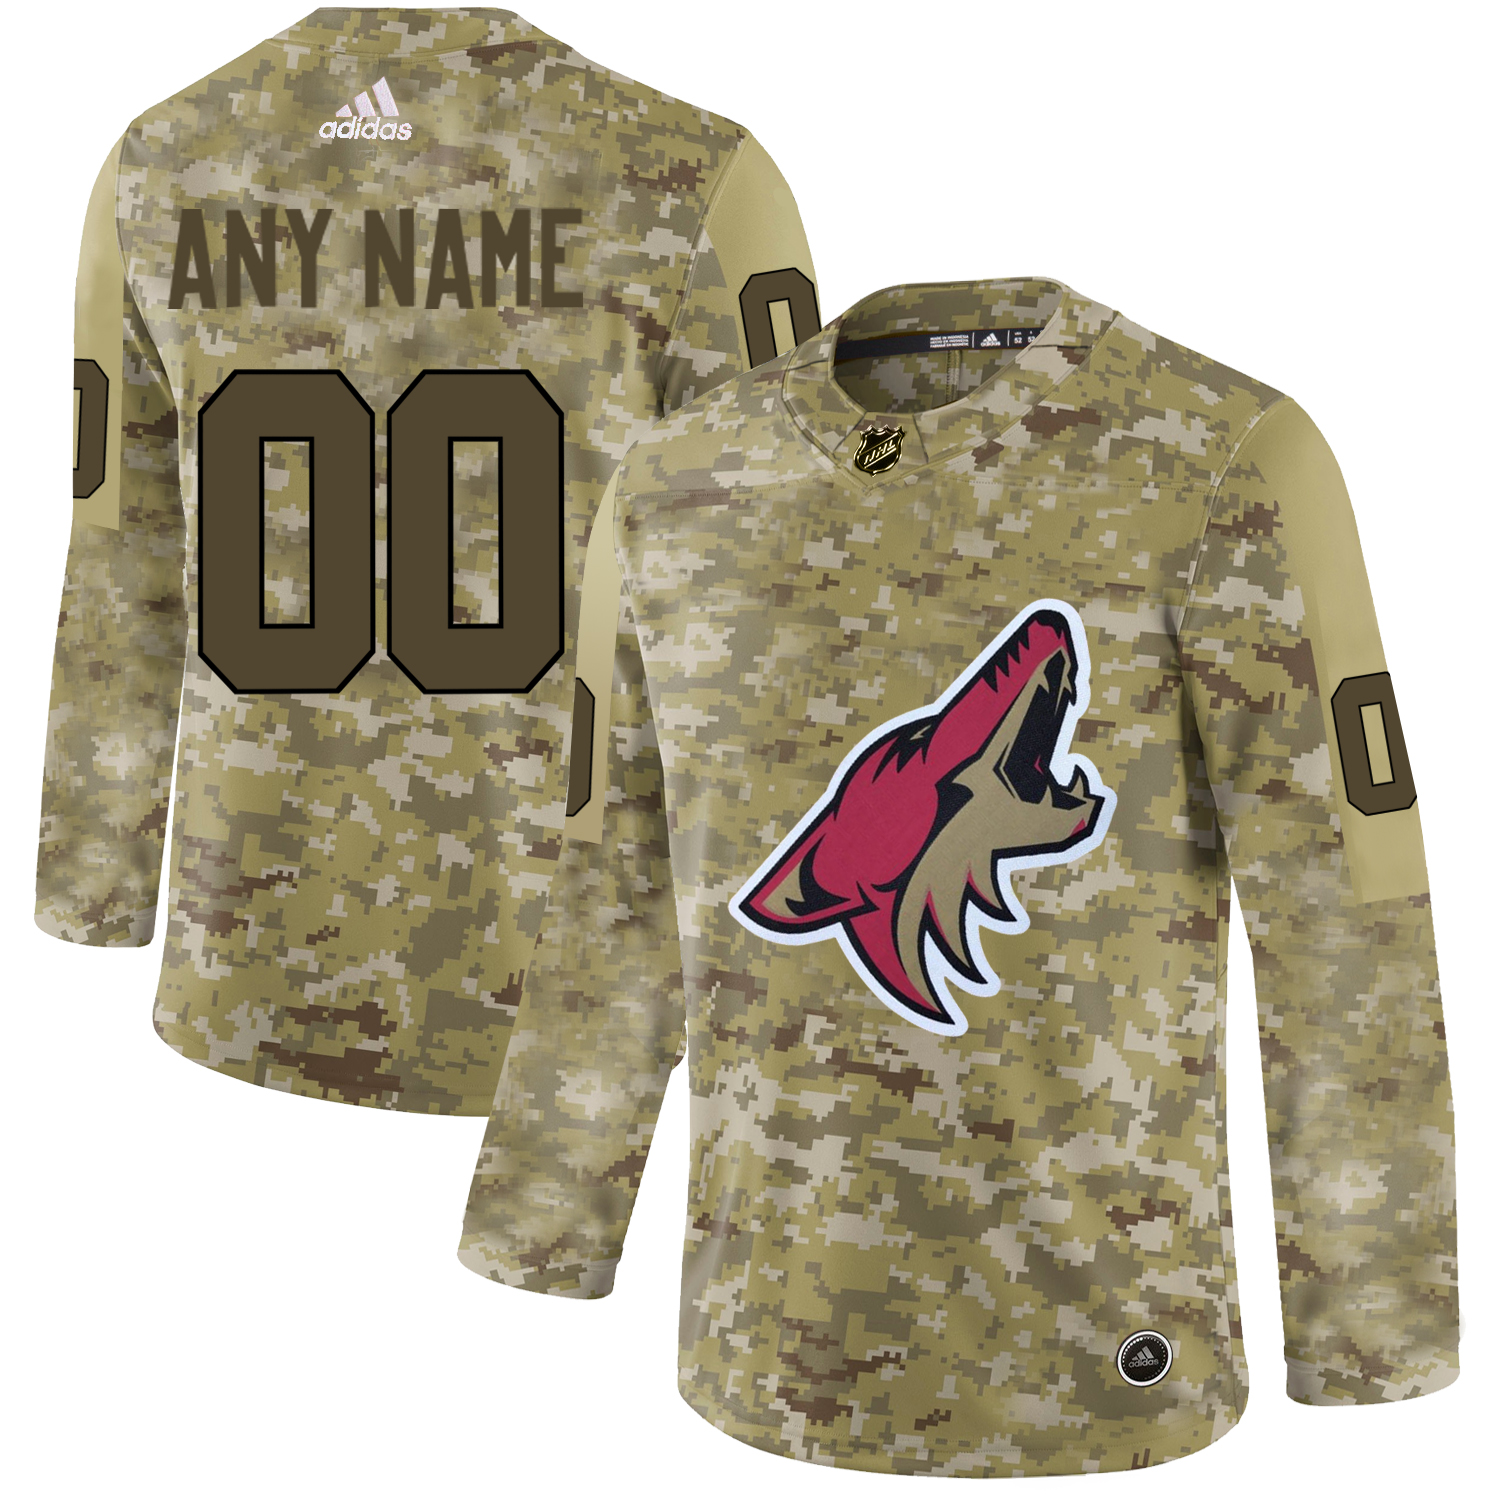 Arizona Coyotes Camo Men's Customized Adidas Jersey - Click Image to Close